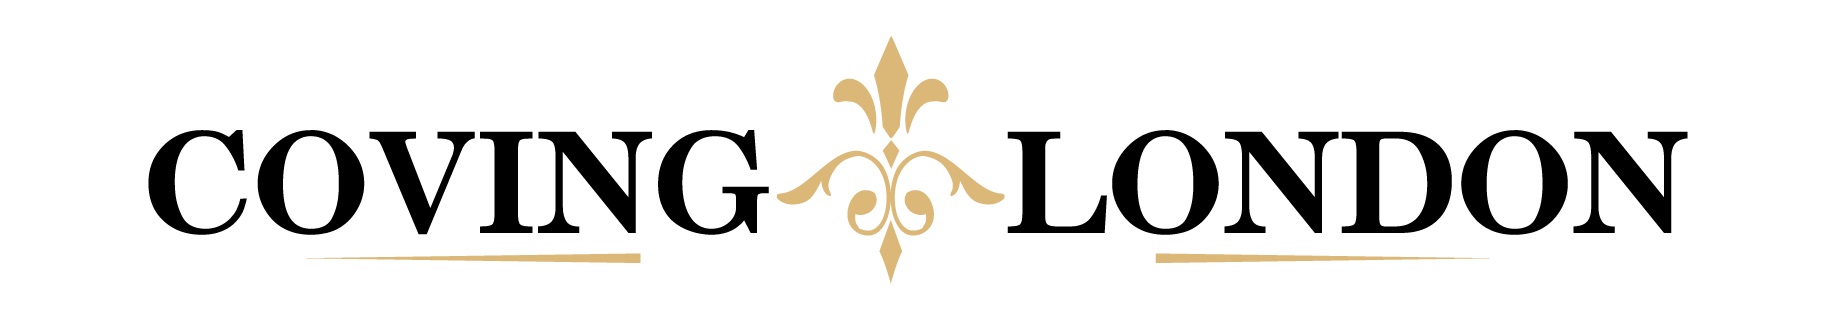 Coving London's logo